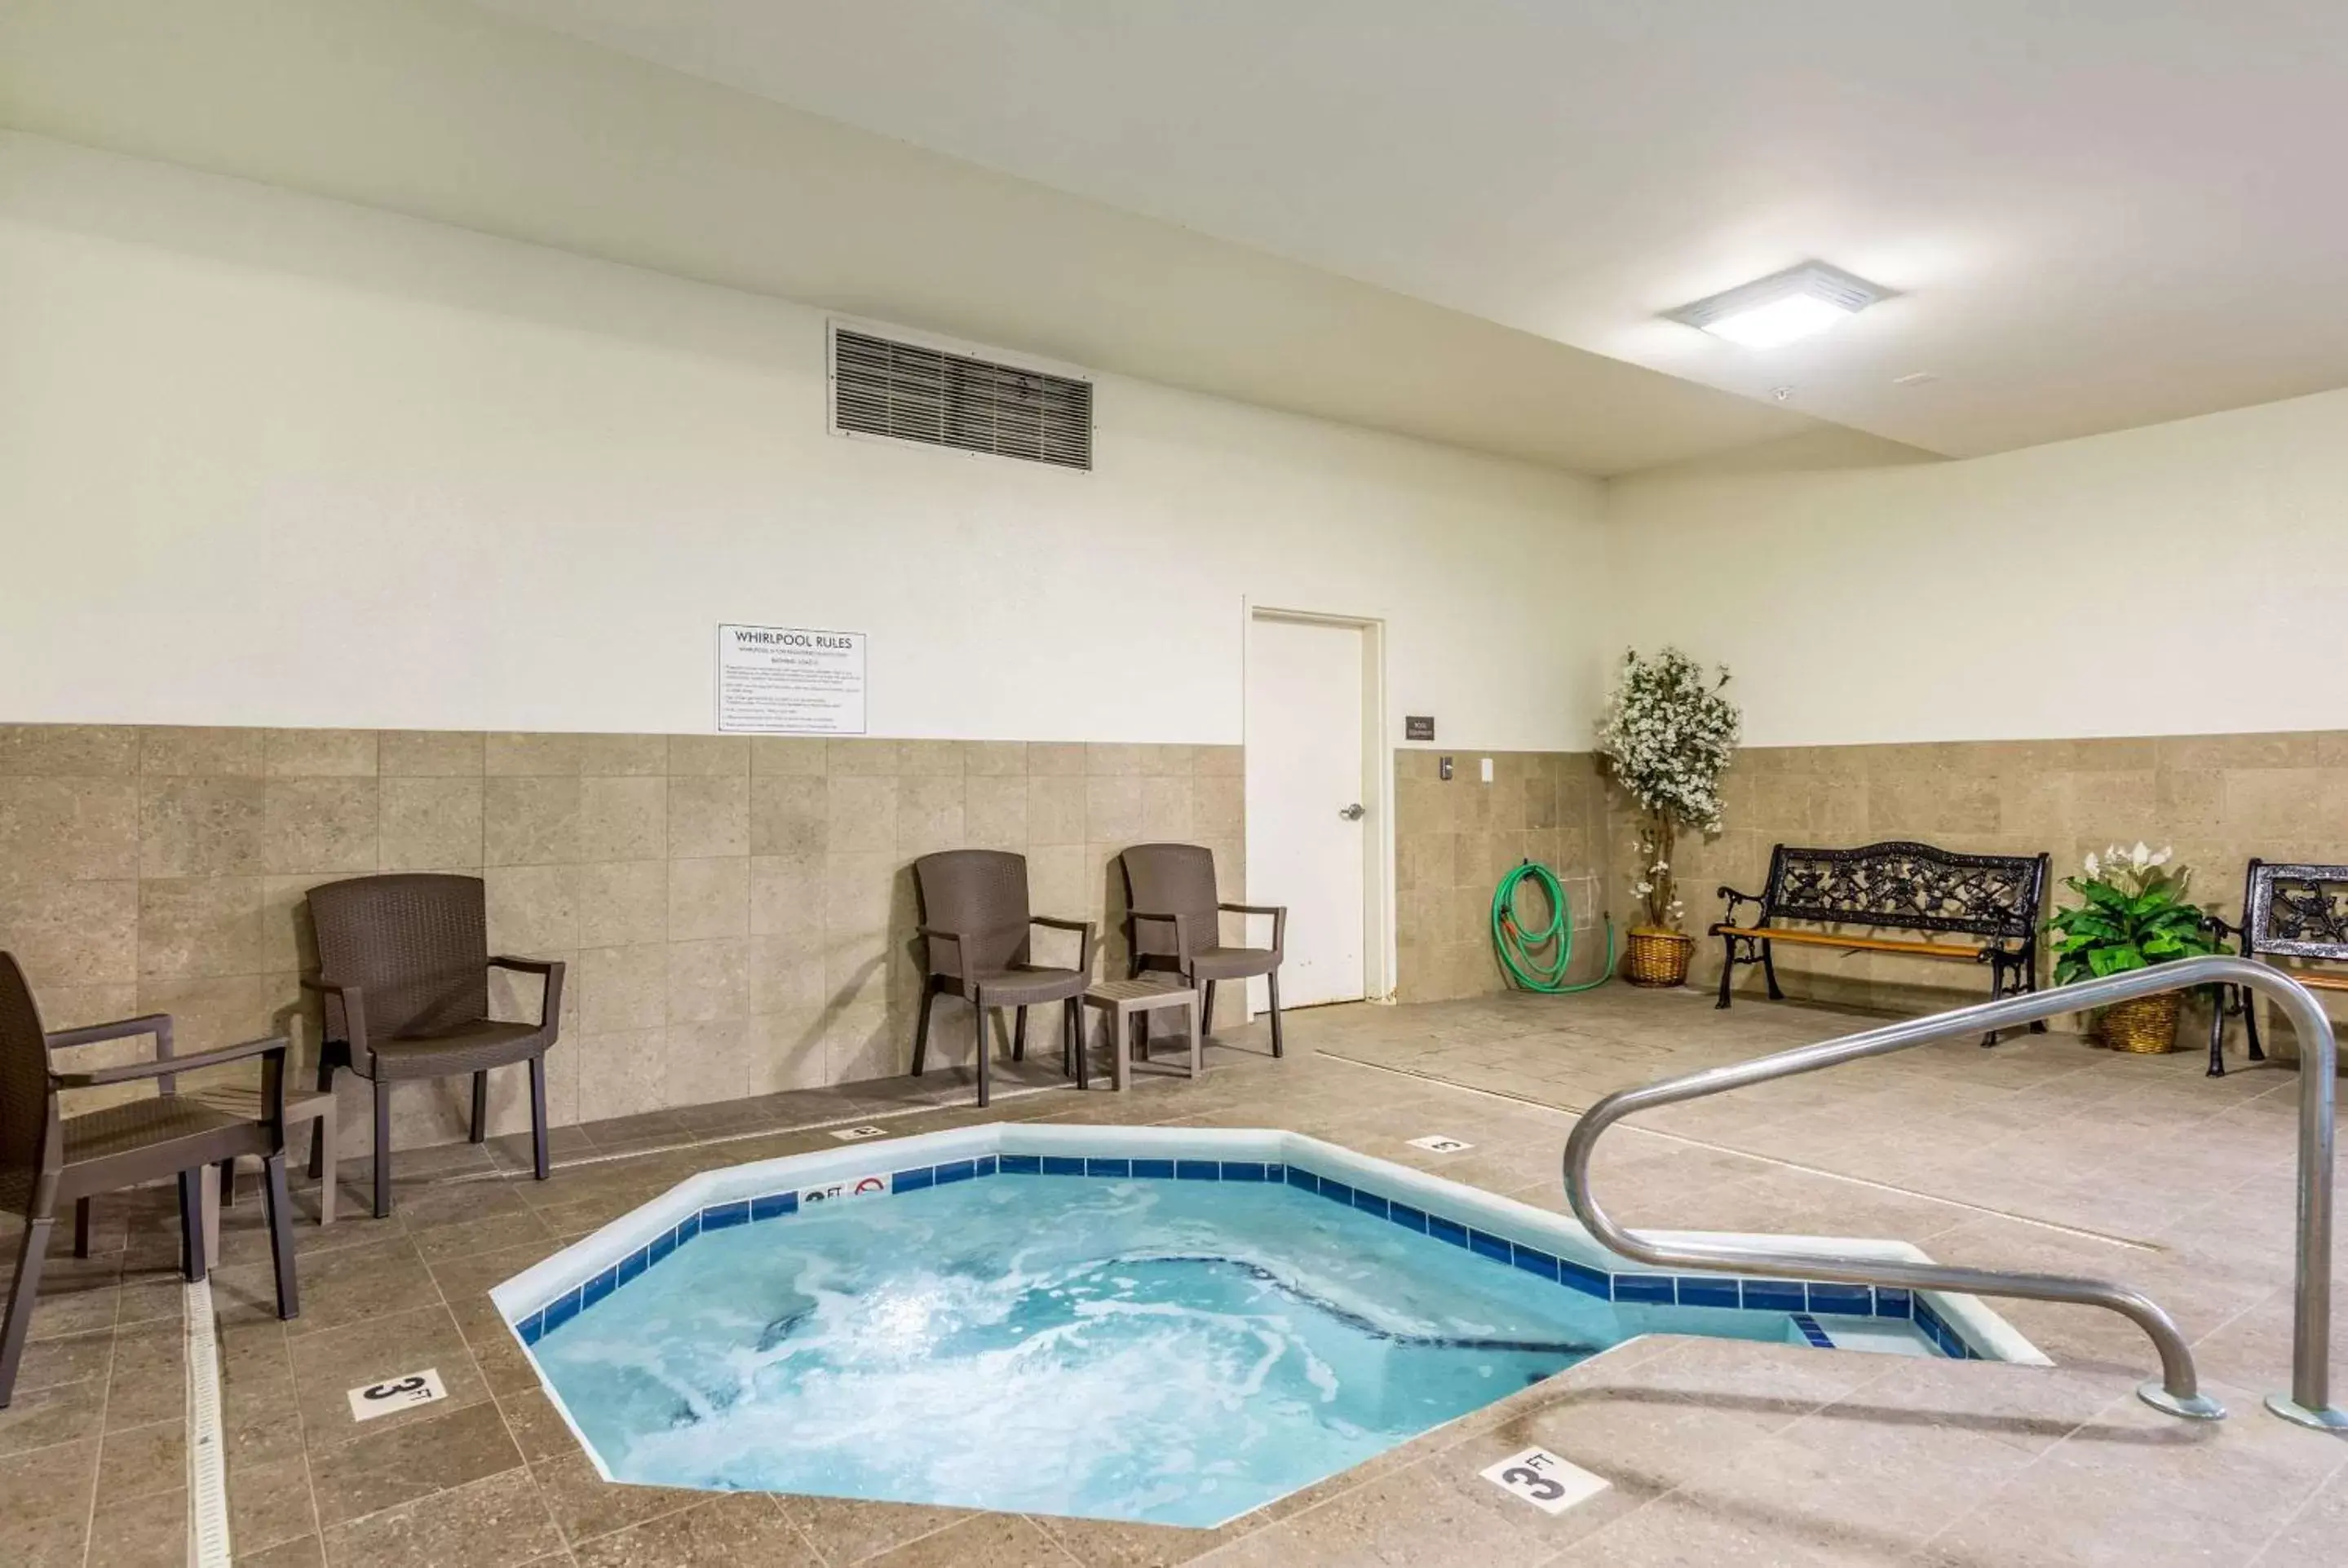 On site, Swimming Pool in Comfort Inn & Suites Dayton North